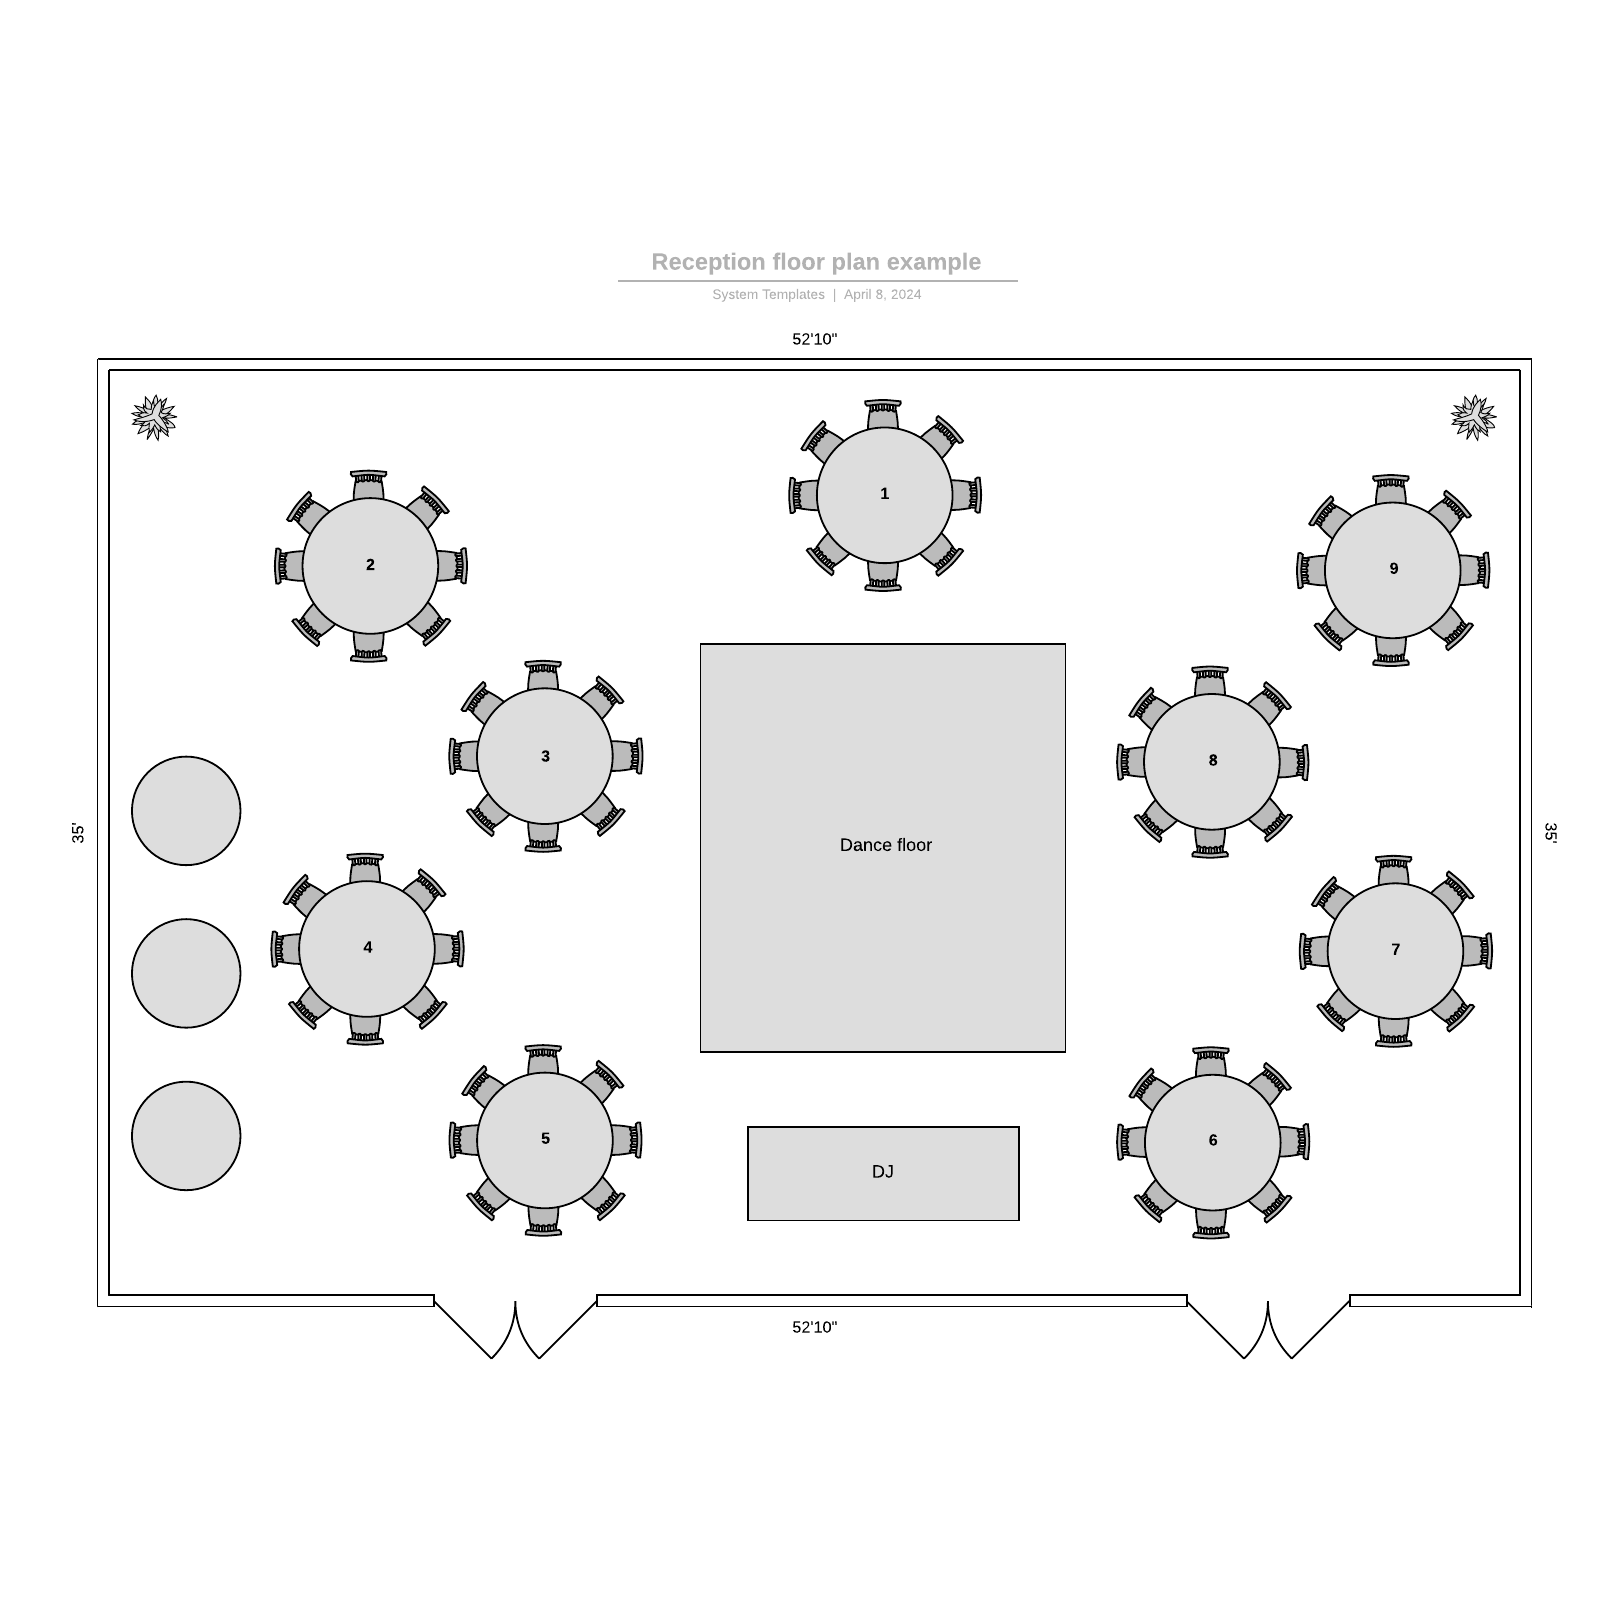 Reception floor plan example example